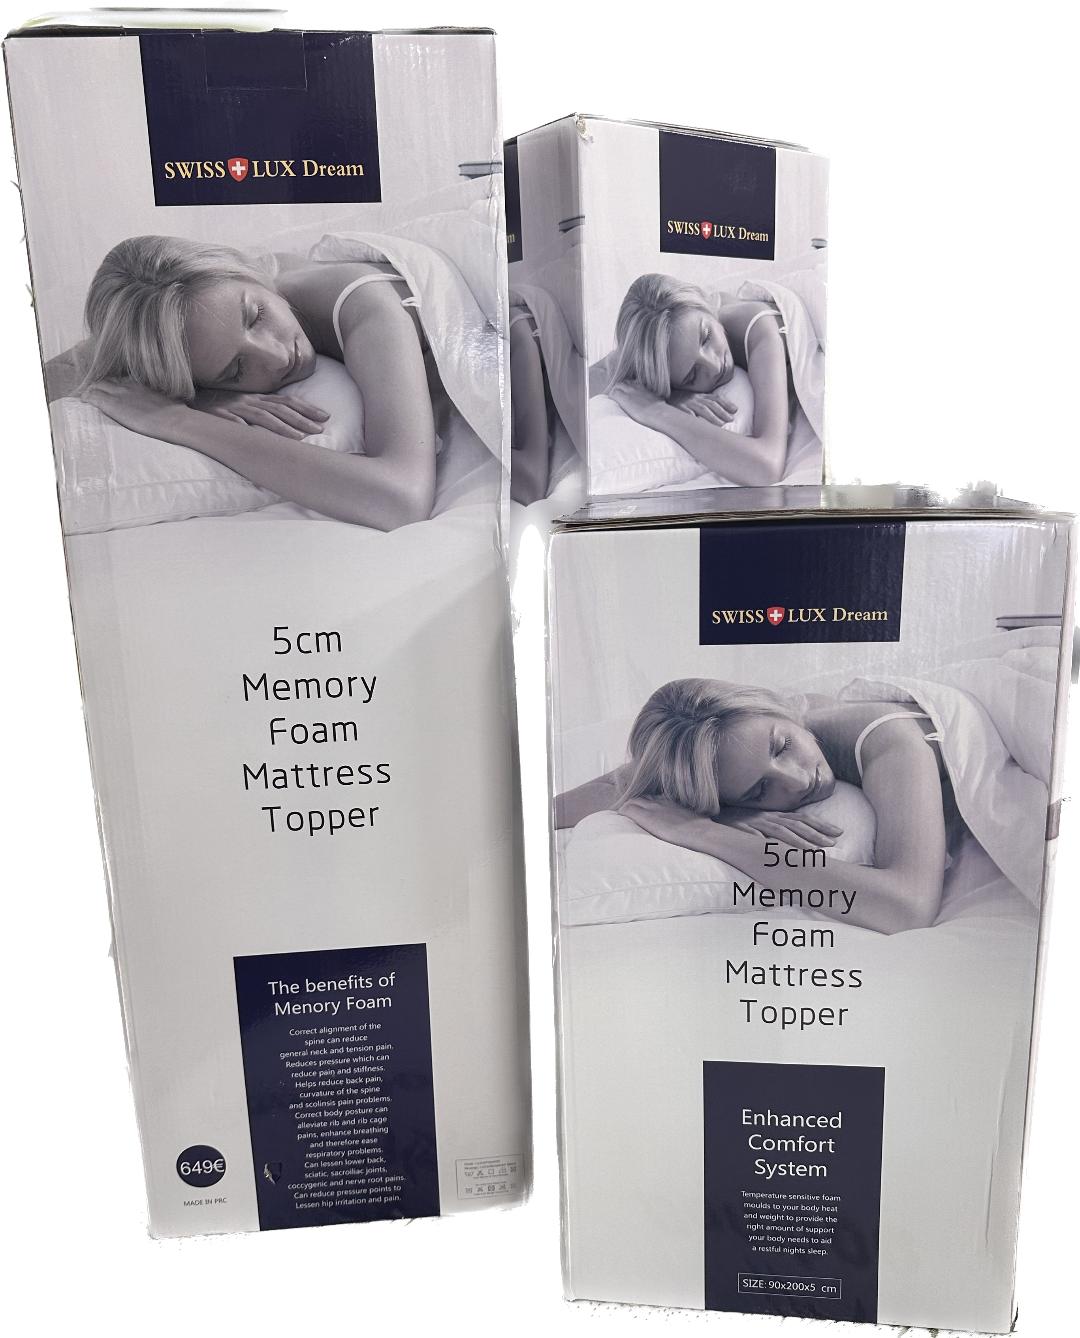 Memory foam Ανώστρωμα Bamboo Topper By Swiss Lux Dream® - ΑΝΩΣΤΡΩΜΑΤΑSwiss Lux Dream®The GrBazaar of Brands